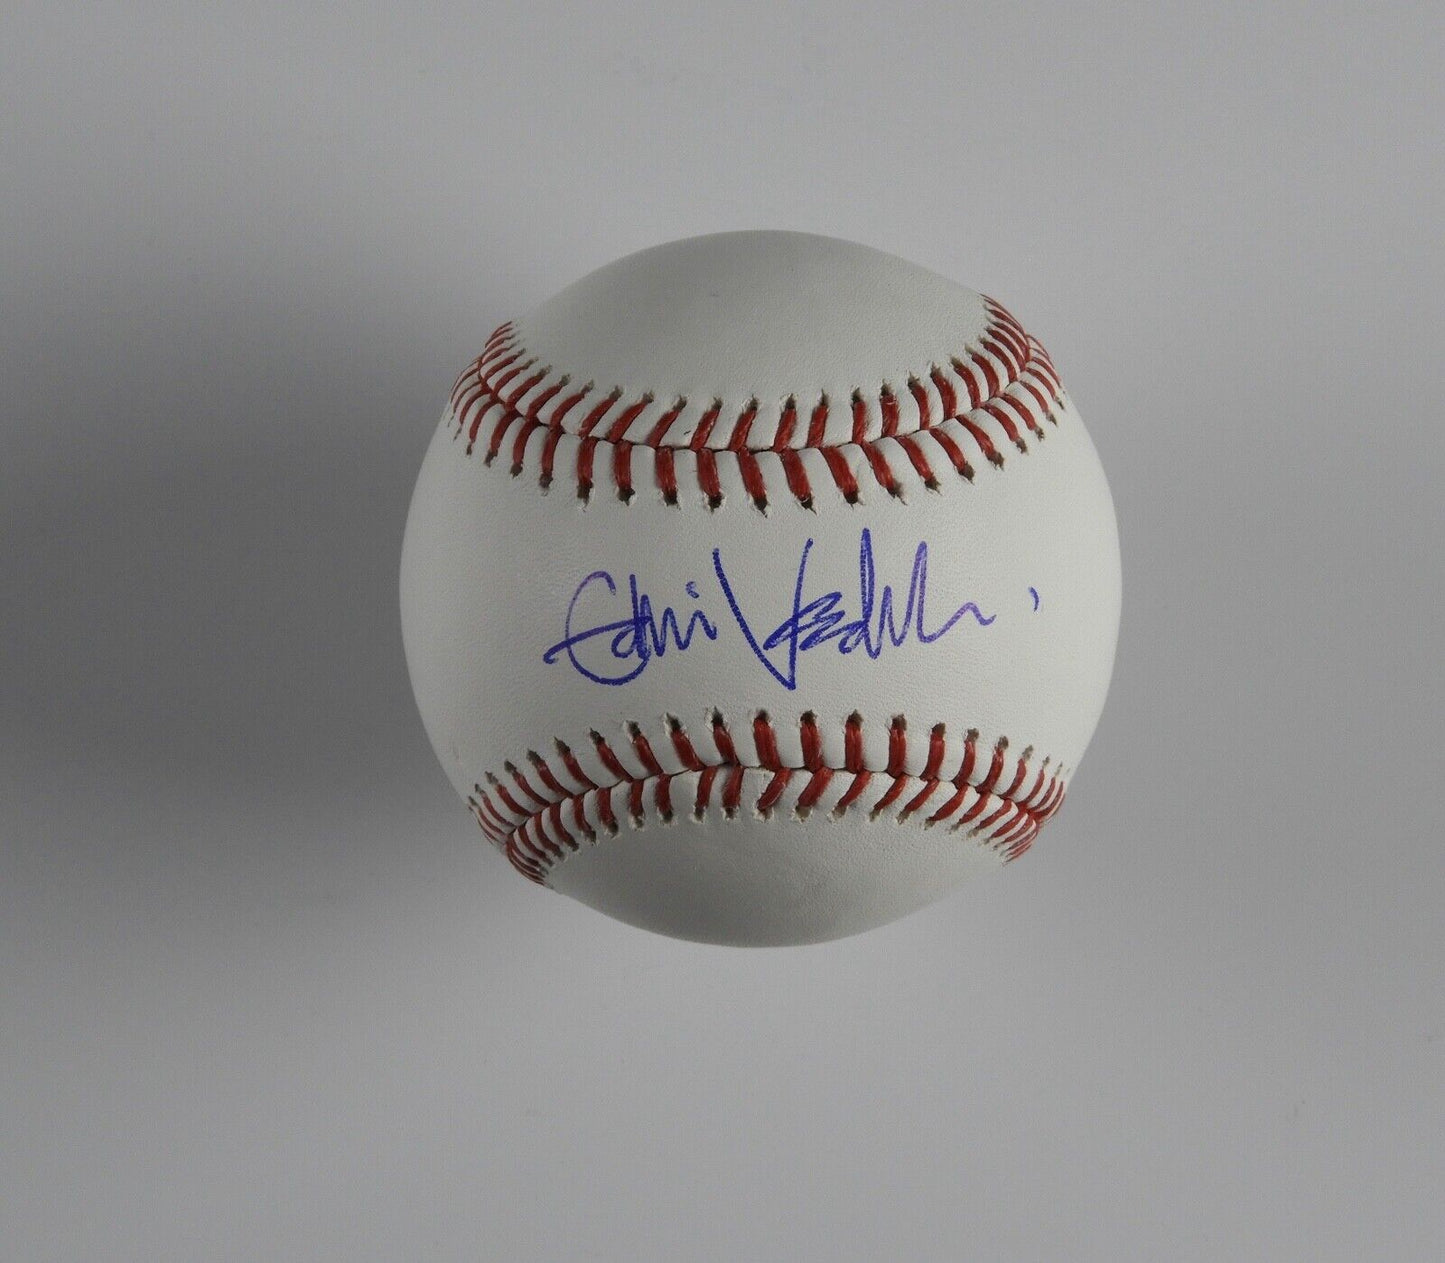 Eddie Vedder JSA  Pearl Jam Autograph Signed Baseball COA Official